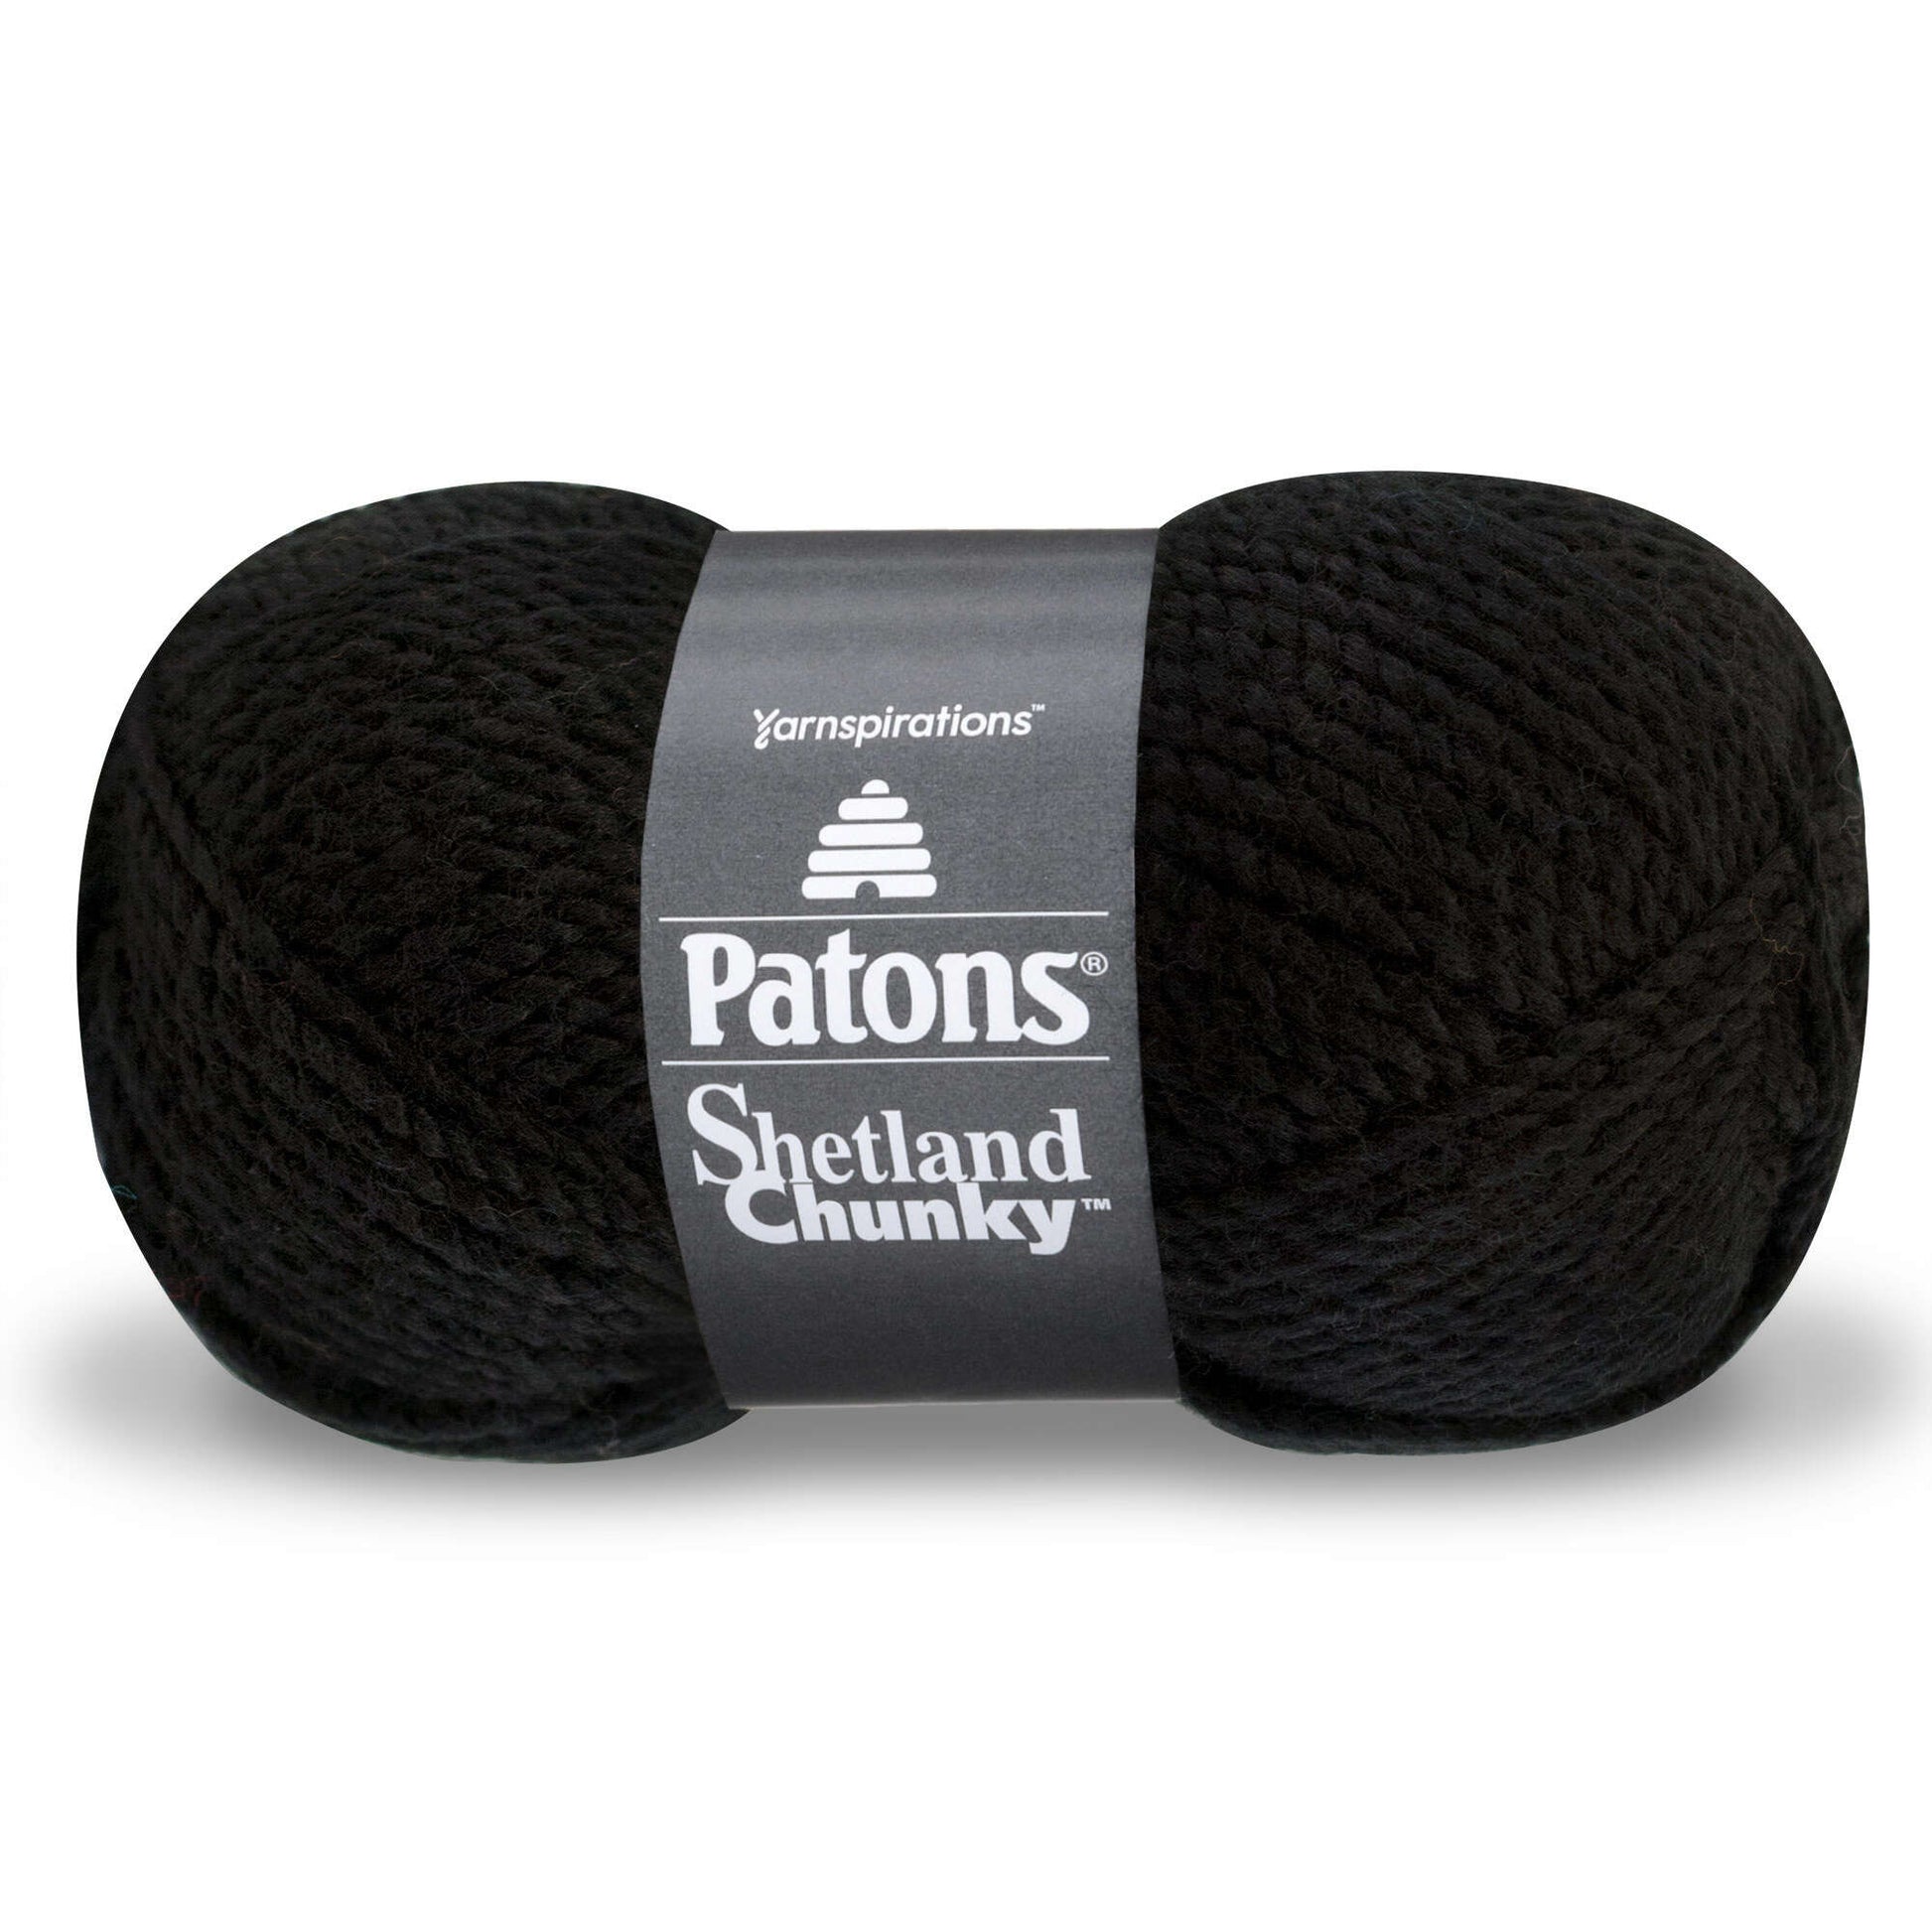 Patons Shetland Chunky Yarn - Discontinued Shades